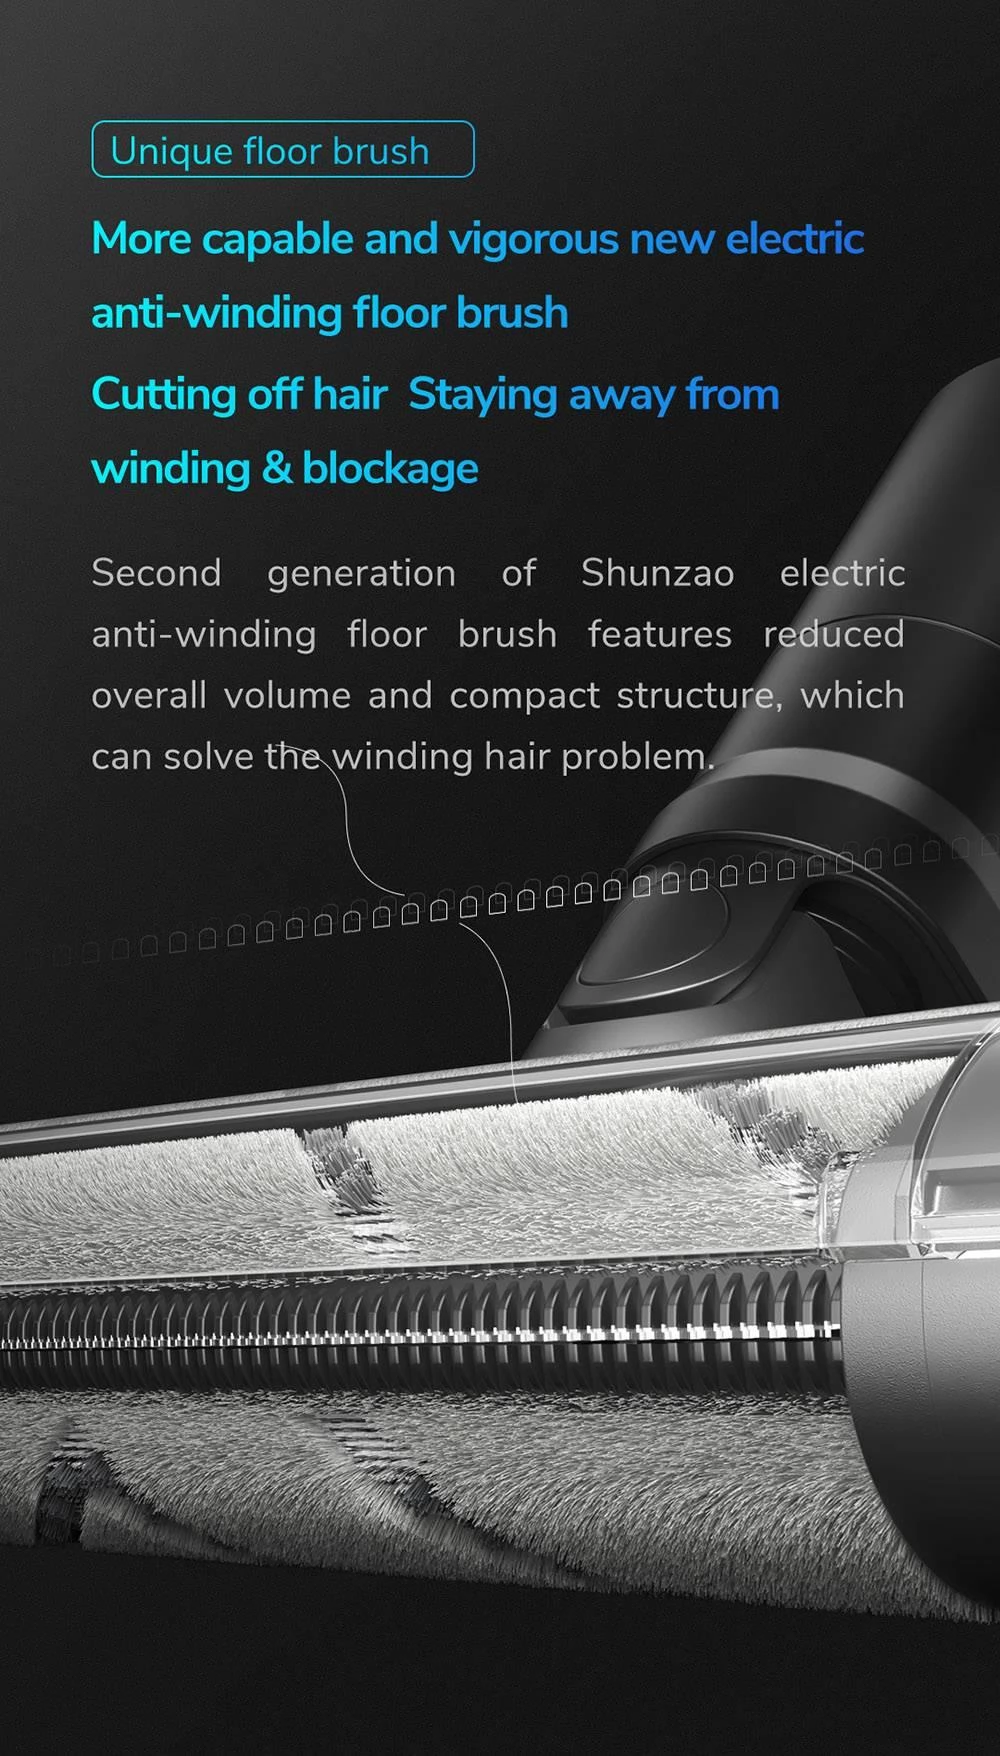 Shunzao Z15 Handheld Vacuum Cleaner 30KPa Powerful Suction 210AW Brushless Motor 60 Minute Run Time LED Display  (EU Version)